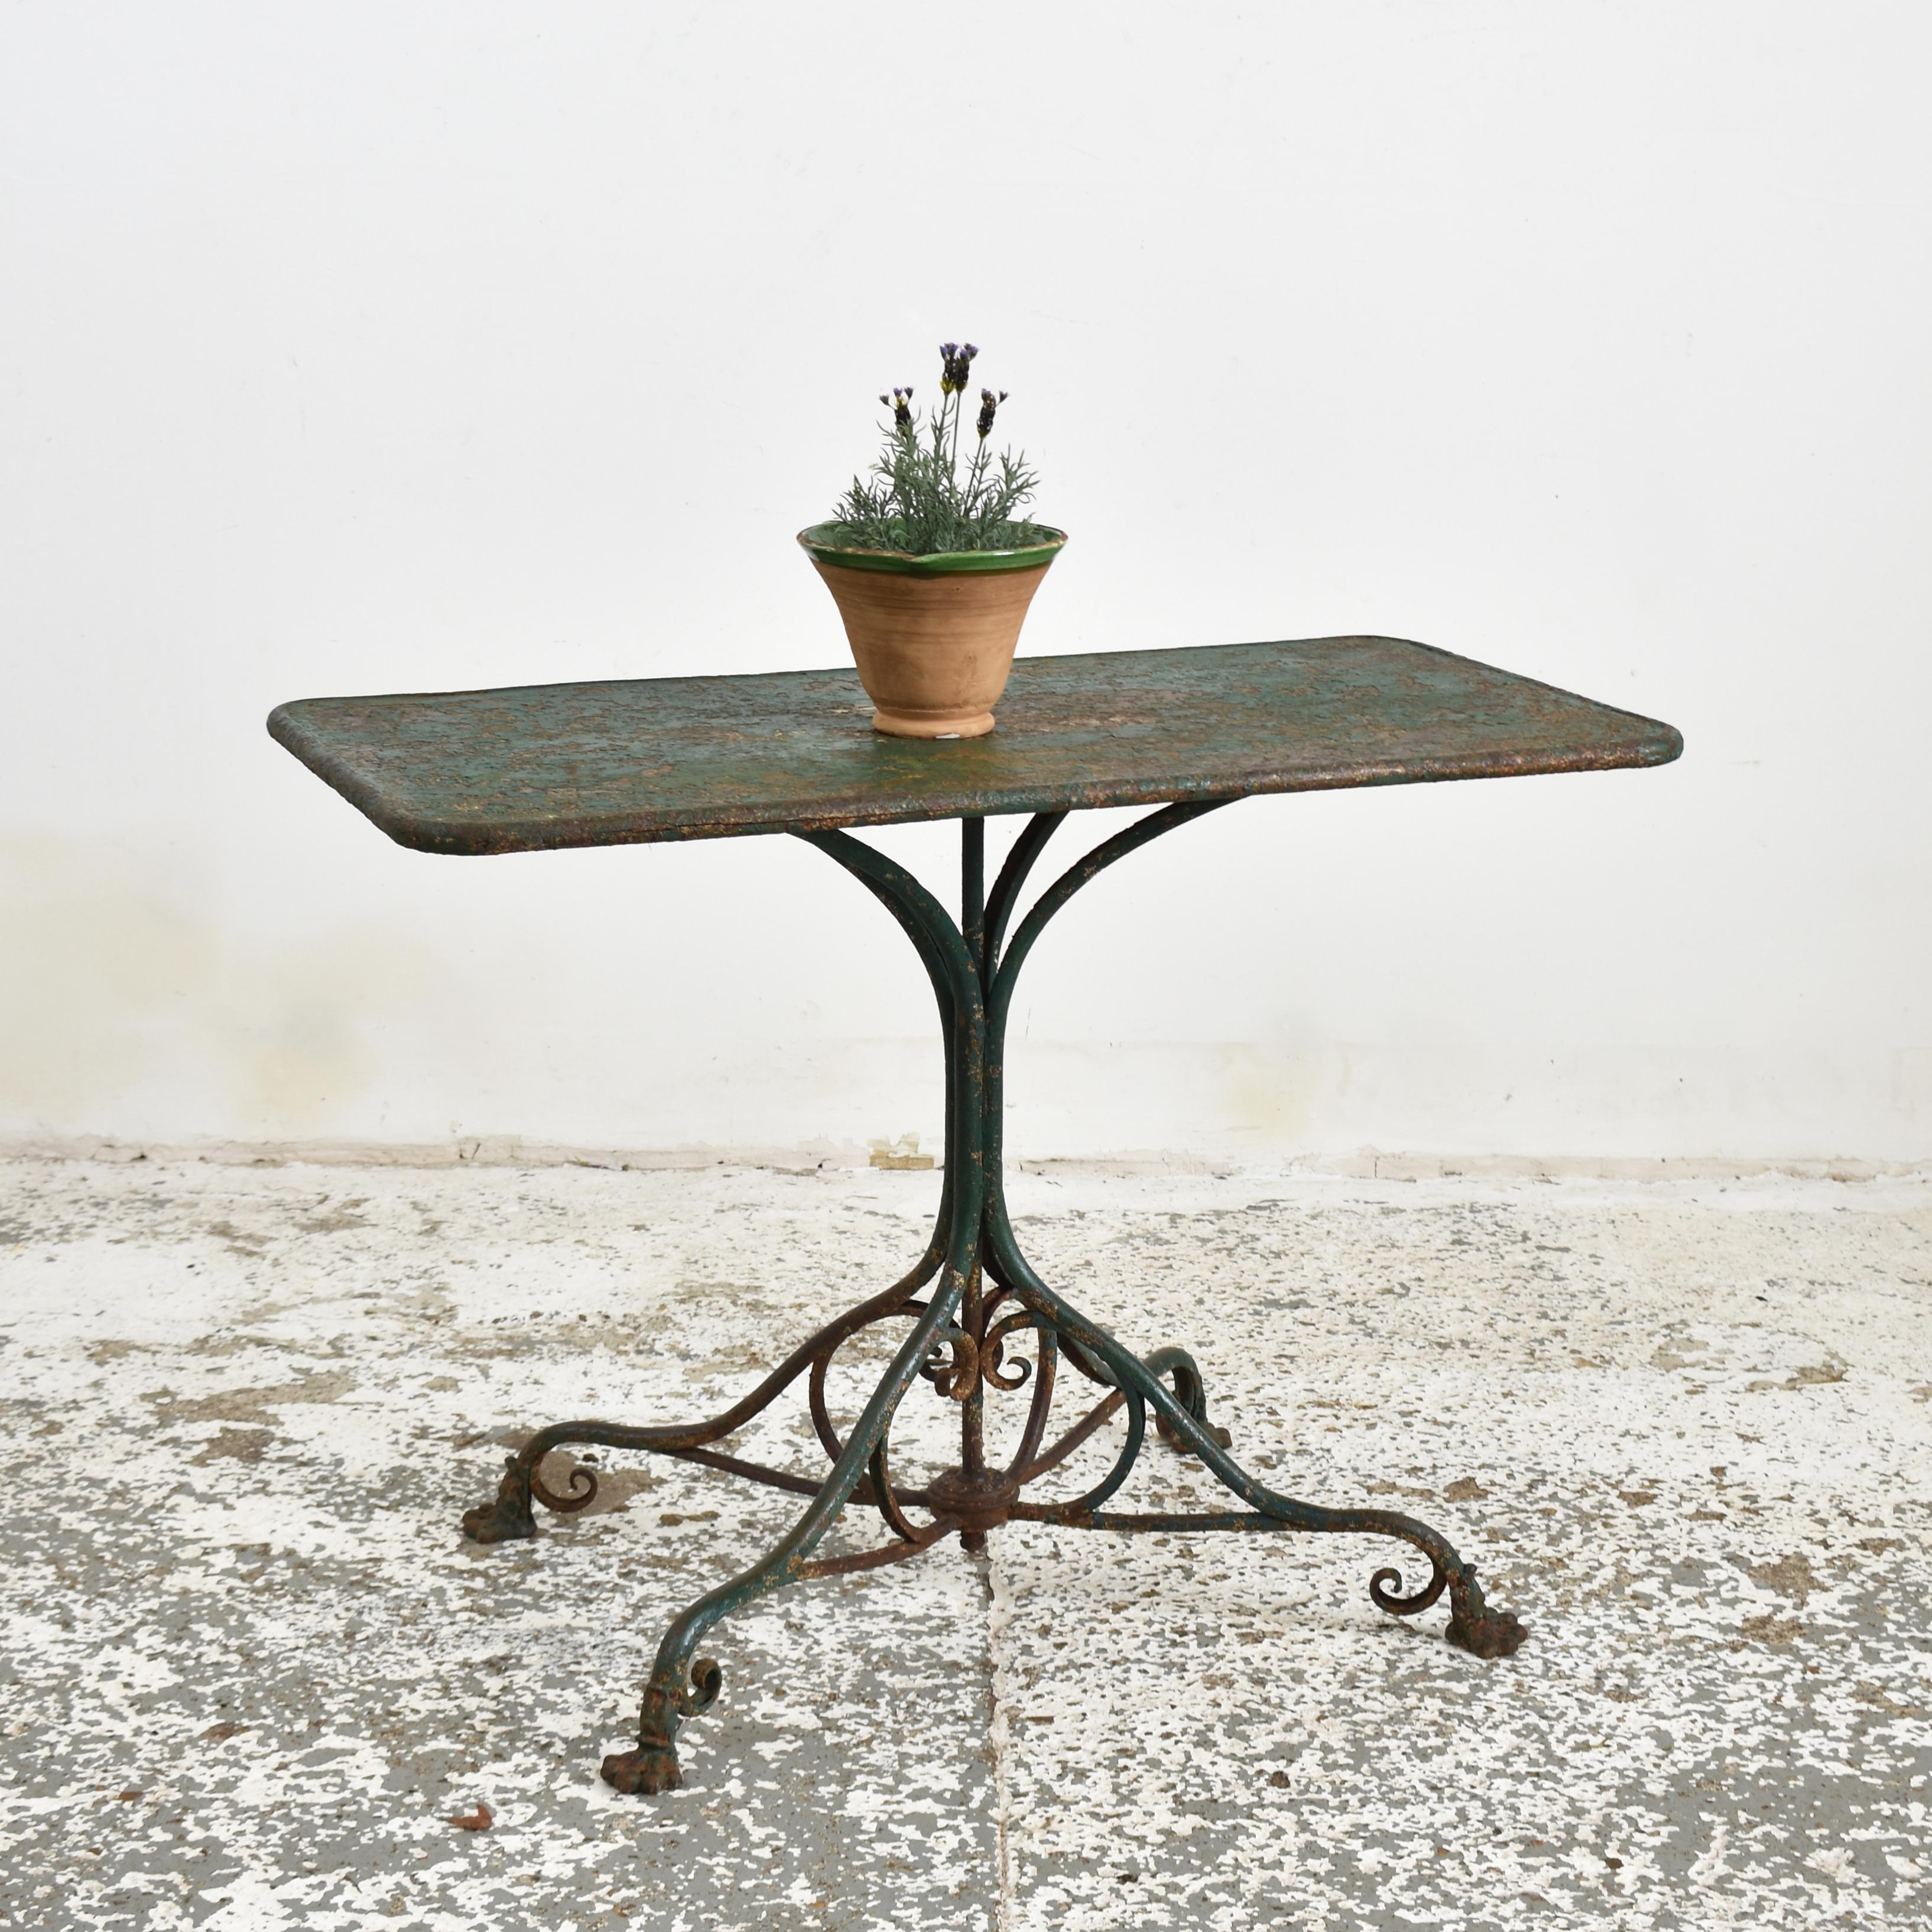 French Provincial Original Antique French Arras Wrought Iron Garden Table